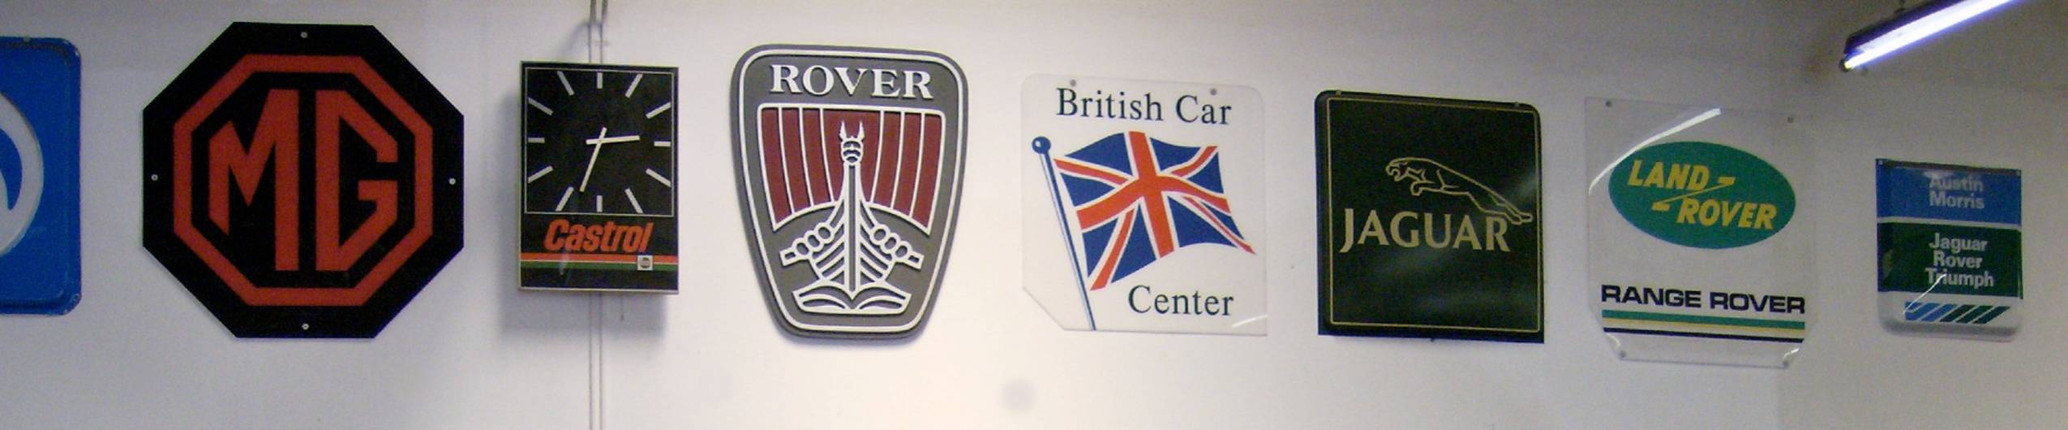 Logo mg, rover, brisitsch car, jaguar, landrover